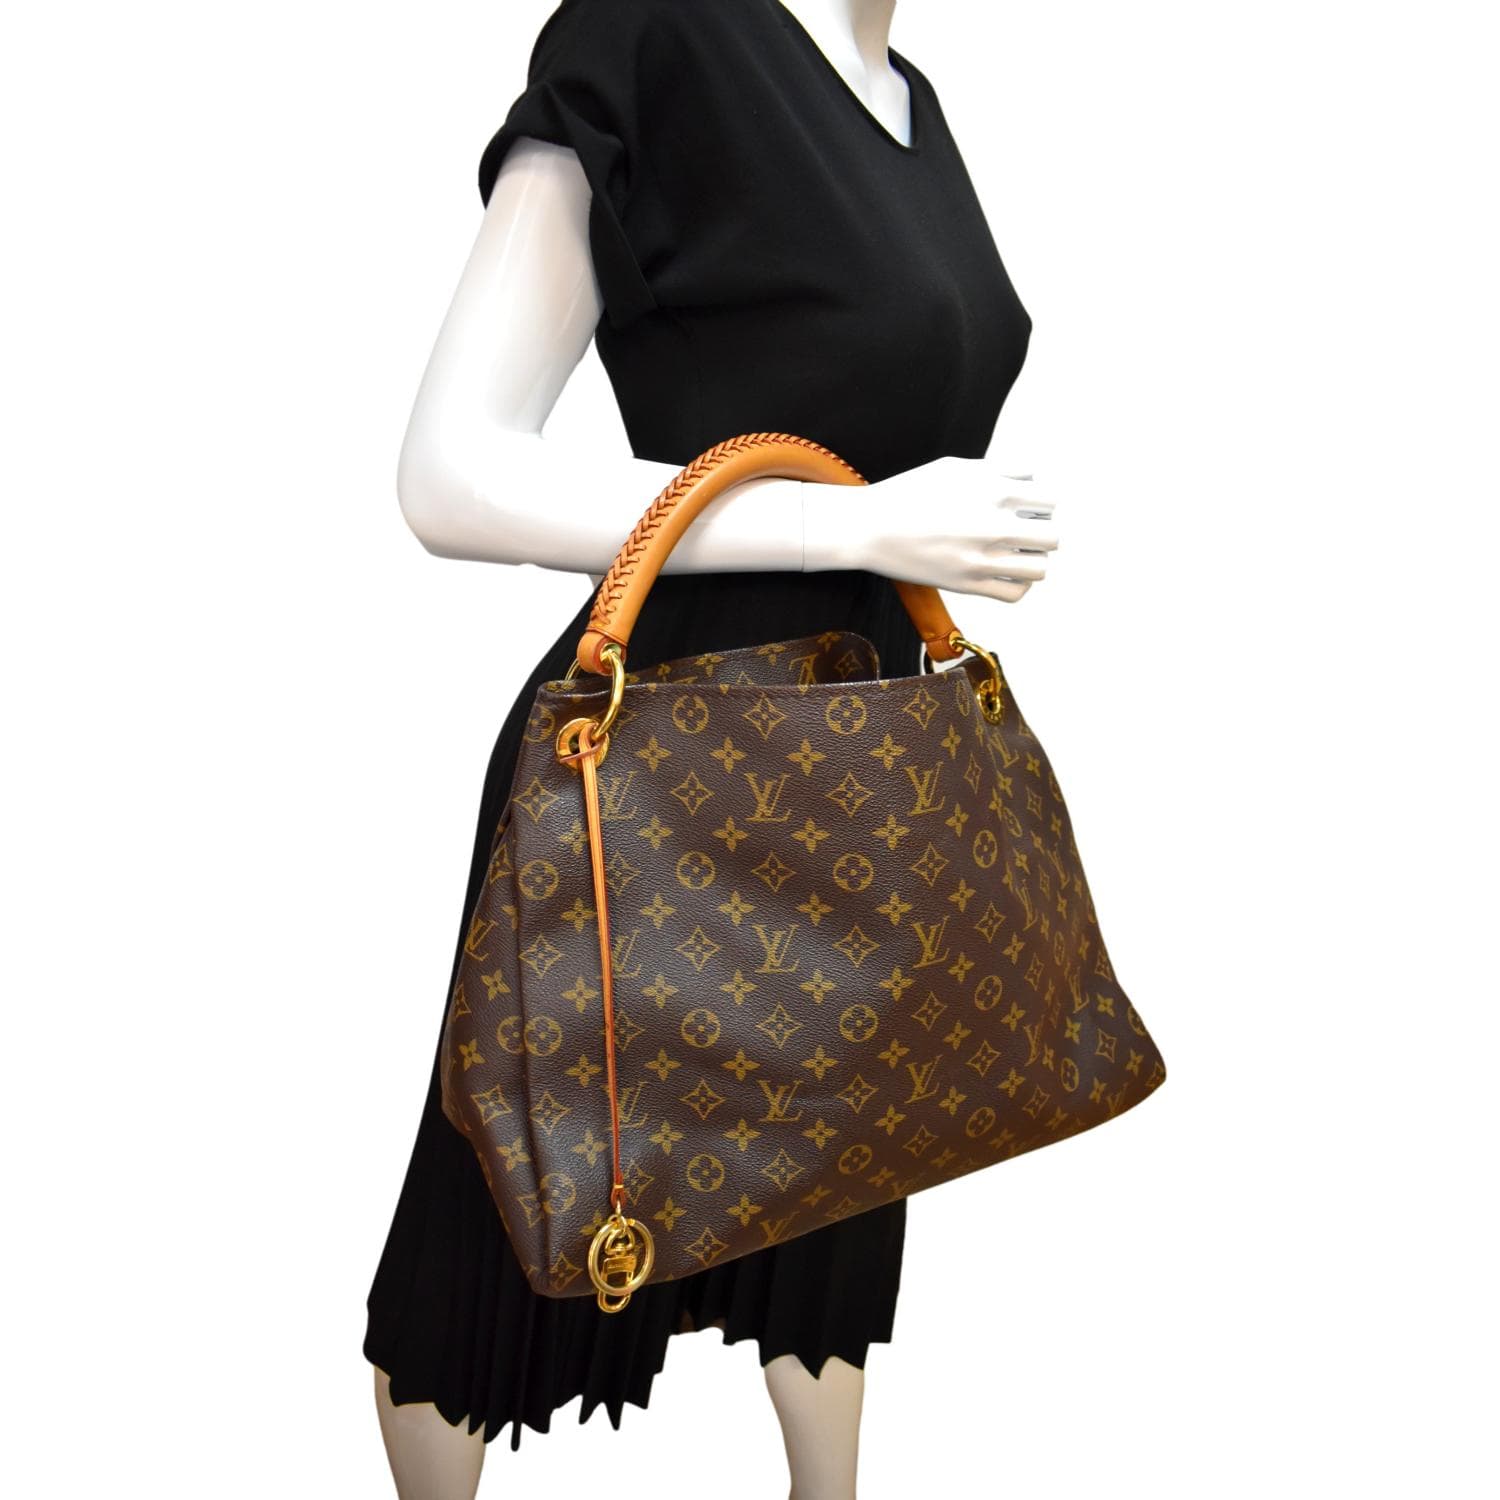 Louis Vuitton Monogram Artsy MM - Brown Hobos, Handbags